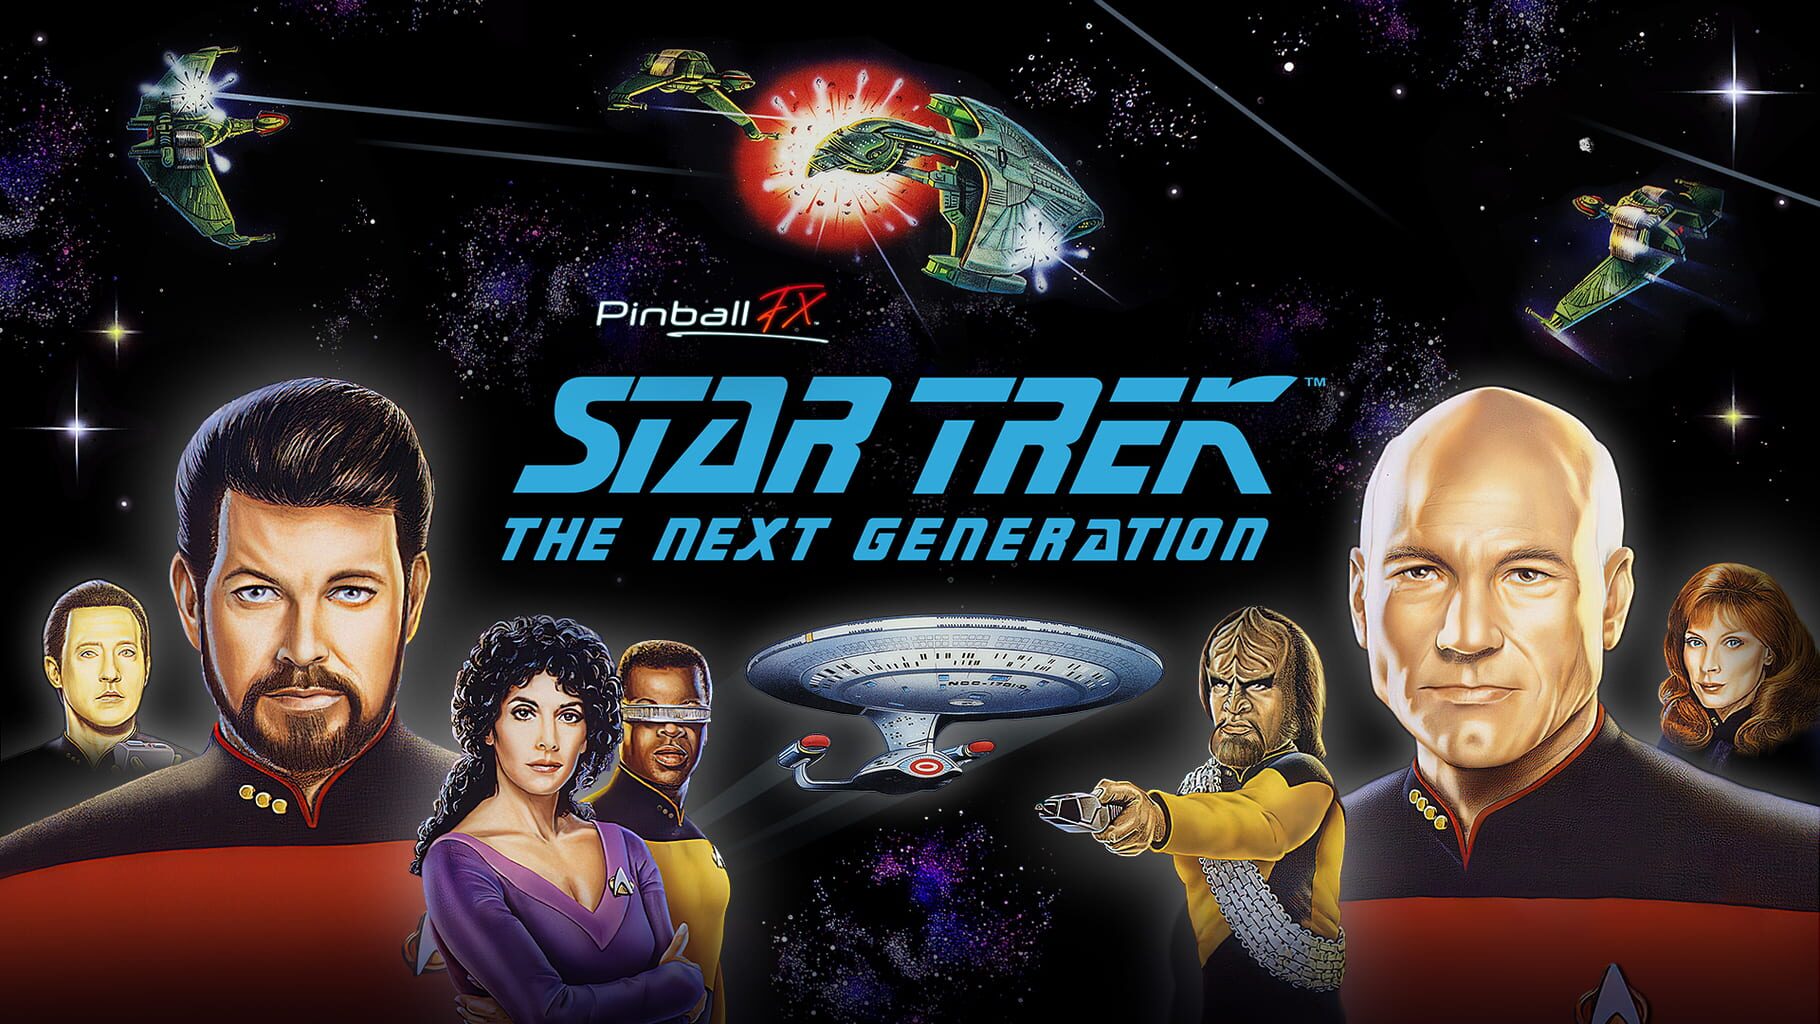 Arte - Pinball FX: Williams Pinball - Star Trek: The Next Generation